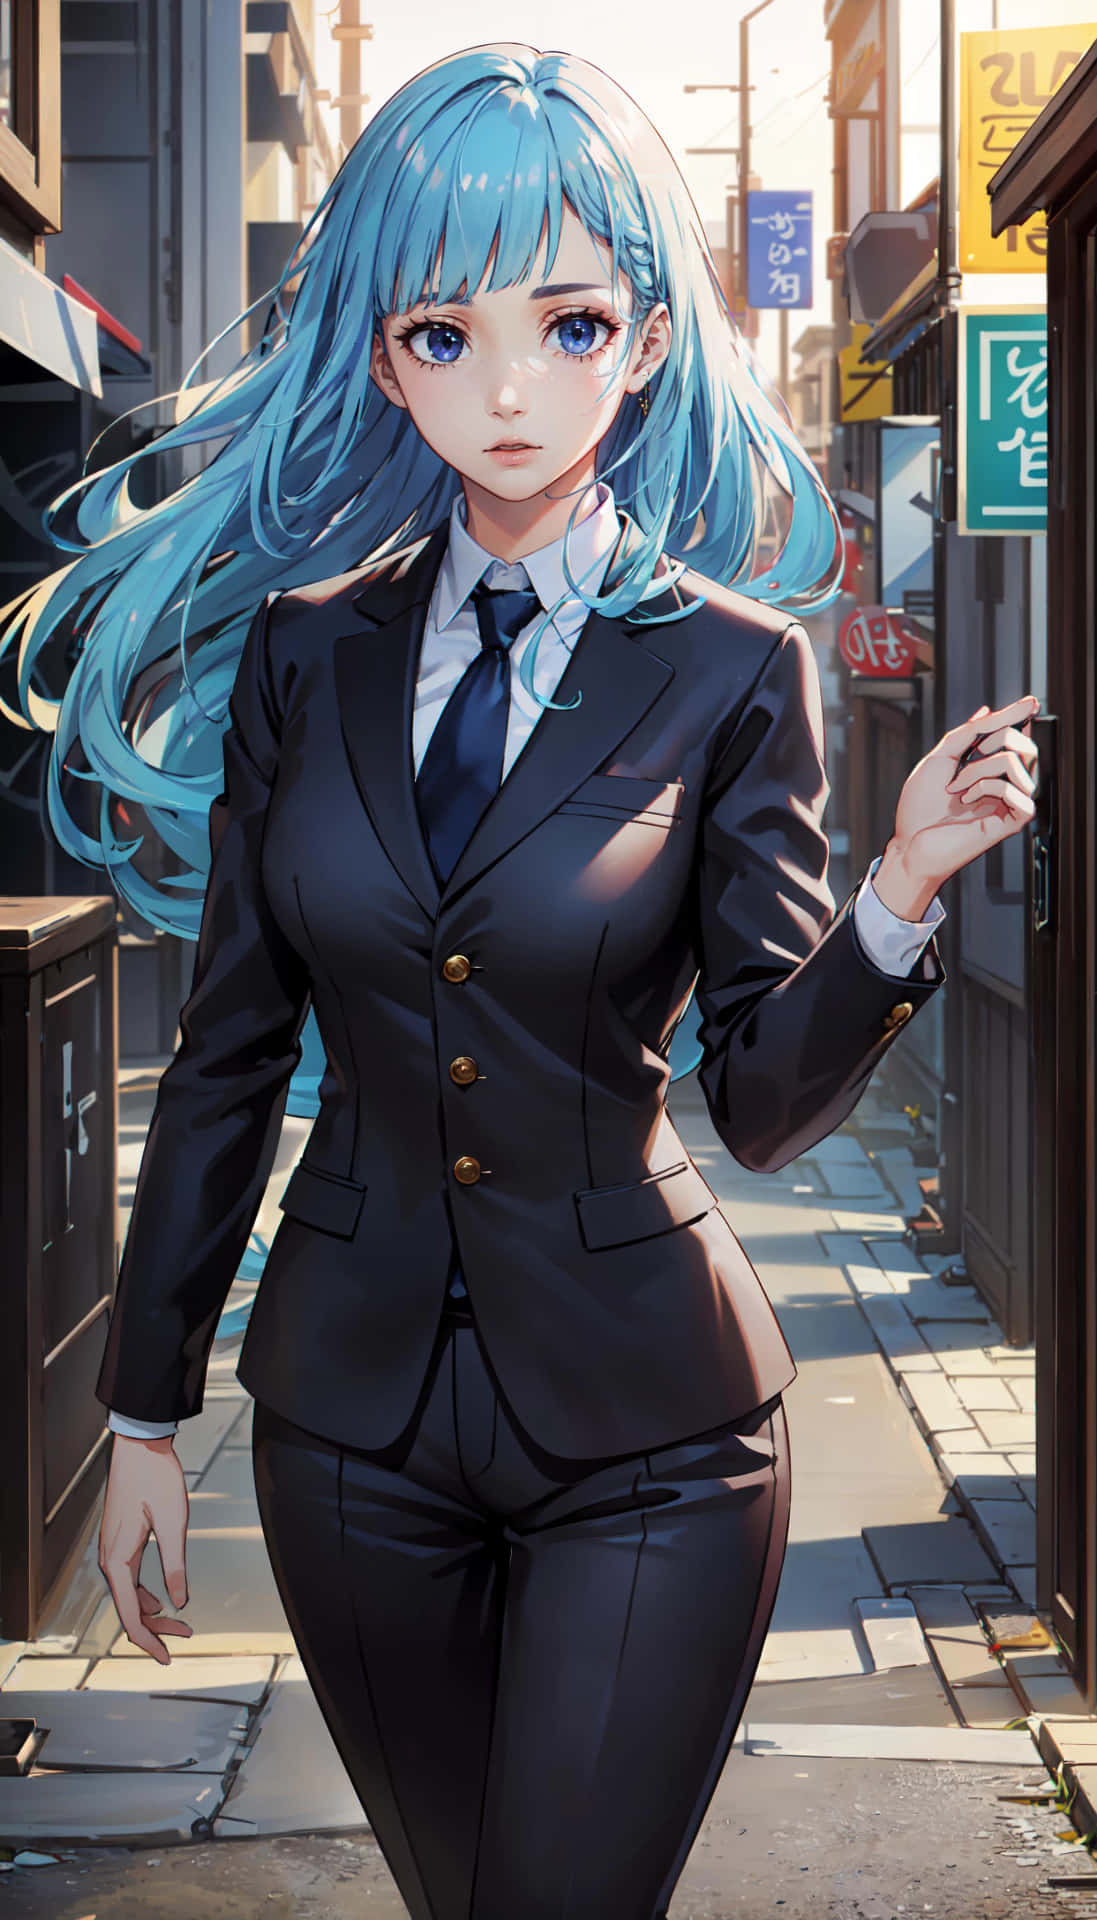 Blue Haired Anime Girlin Suit Wallpaper